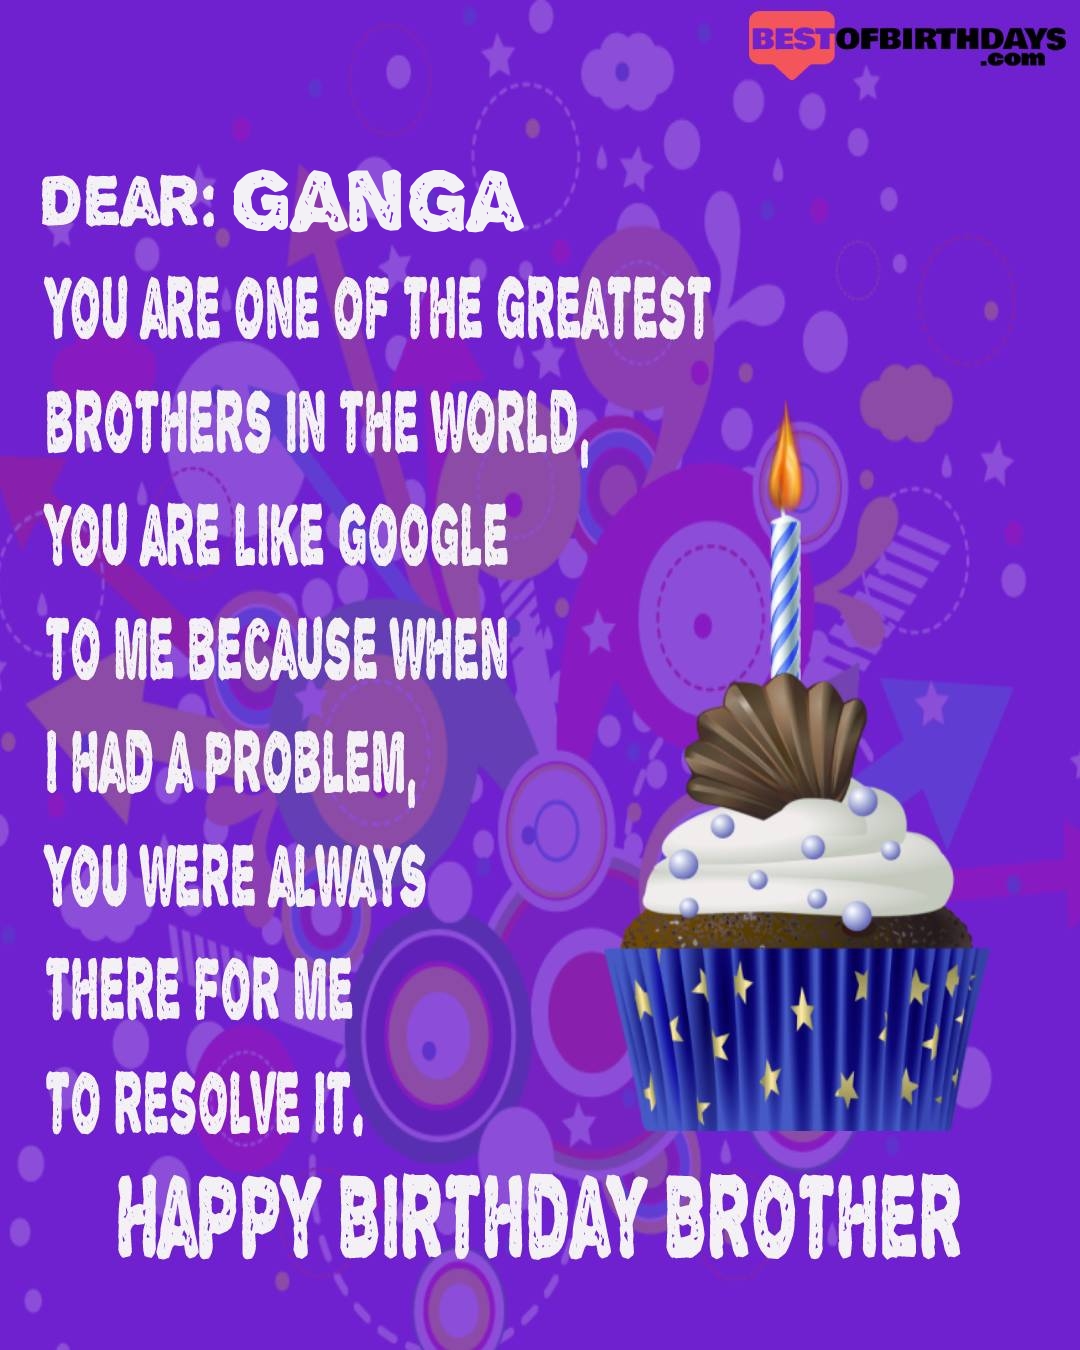 Happy birthday ganga bhai brother bro